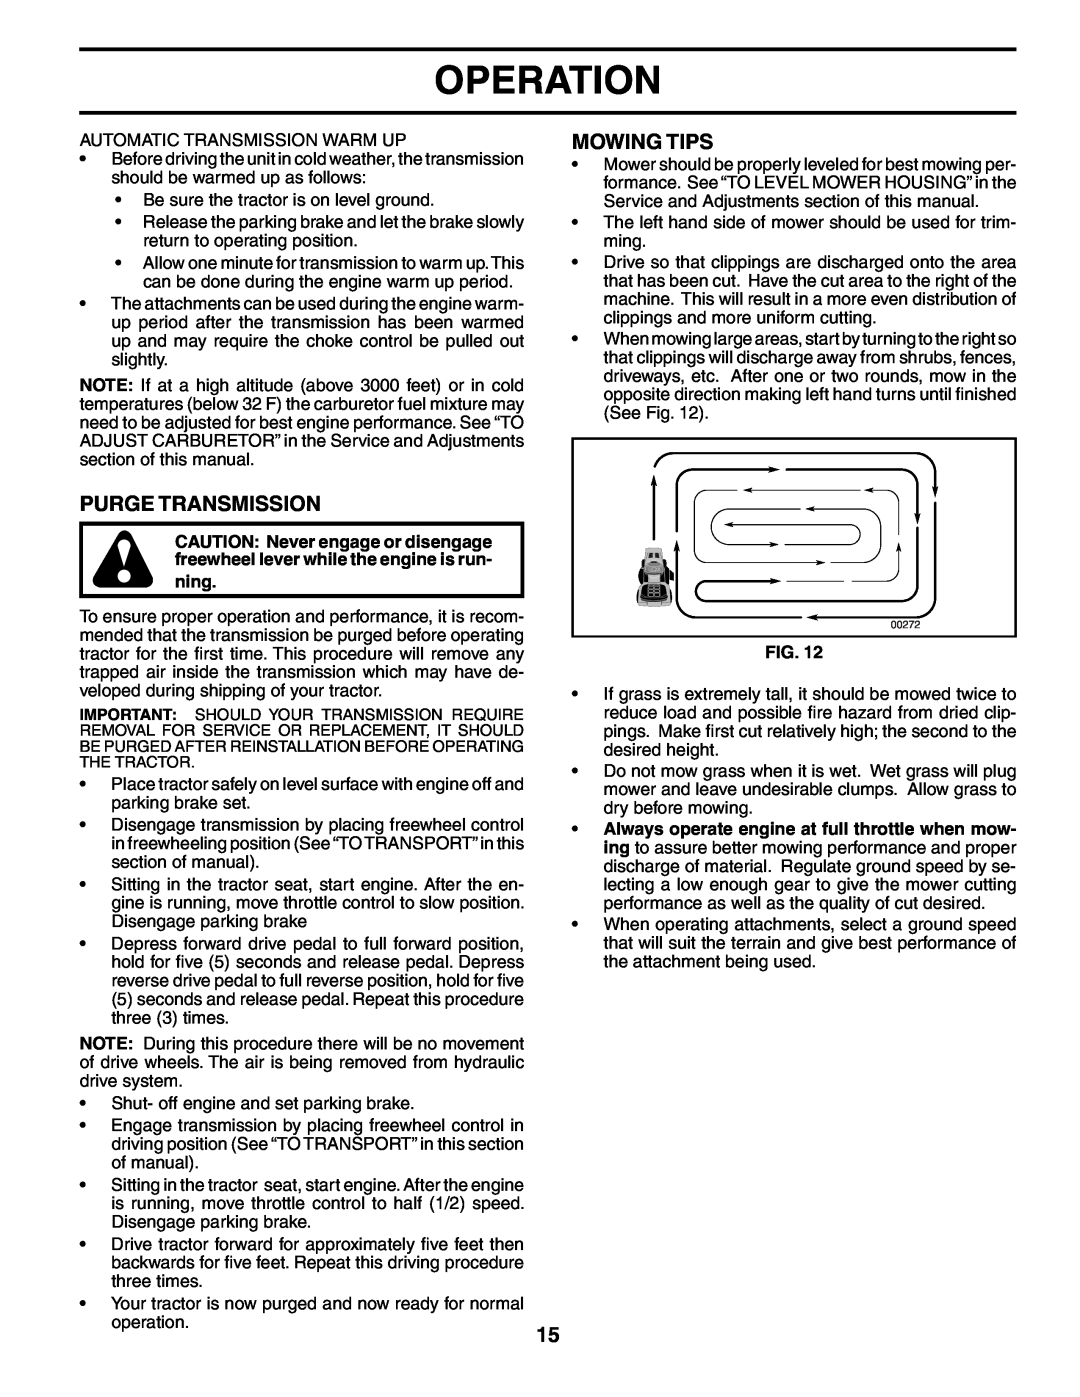 Poulan PD20PH48STA owner manual Purge Transmission, Mowing Tips, Operation, ning 